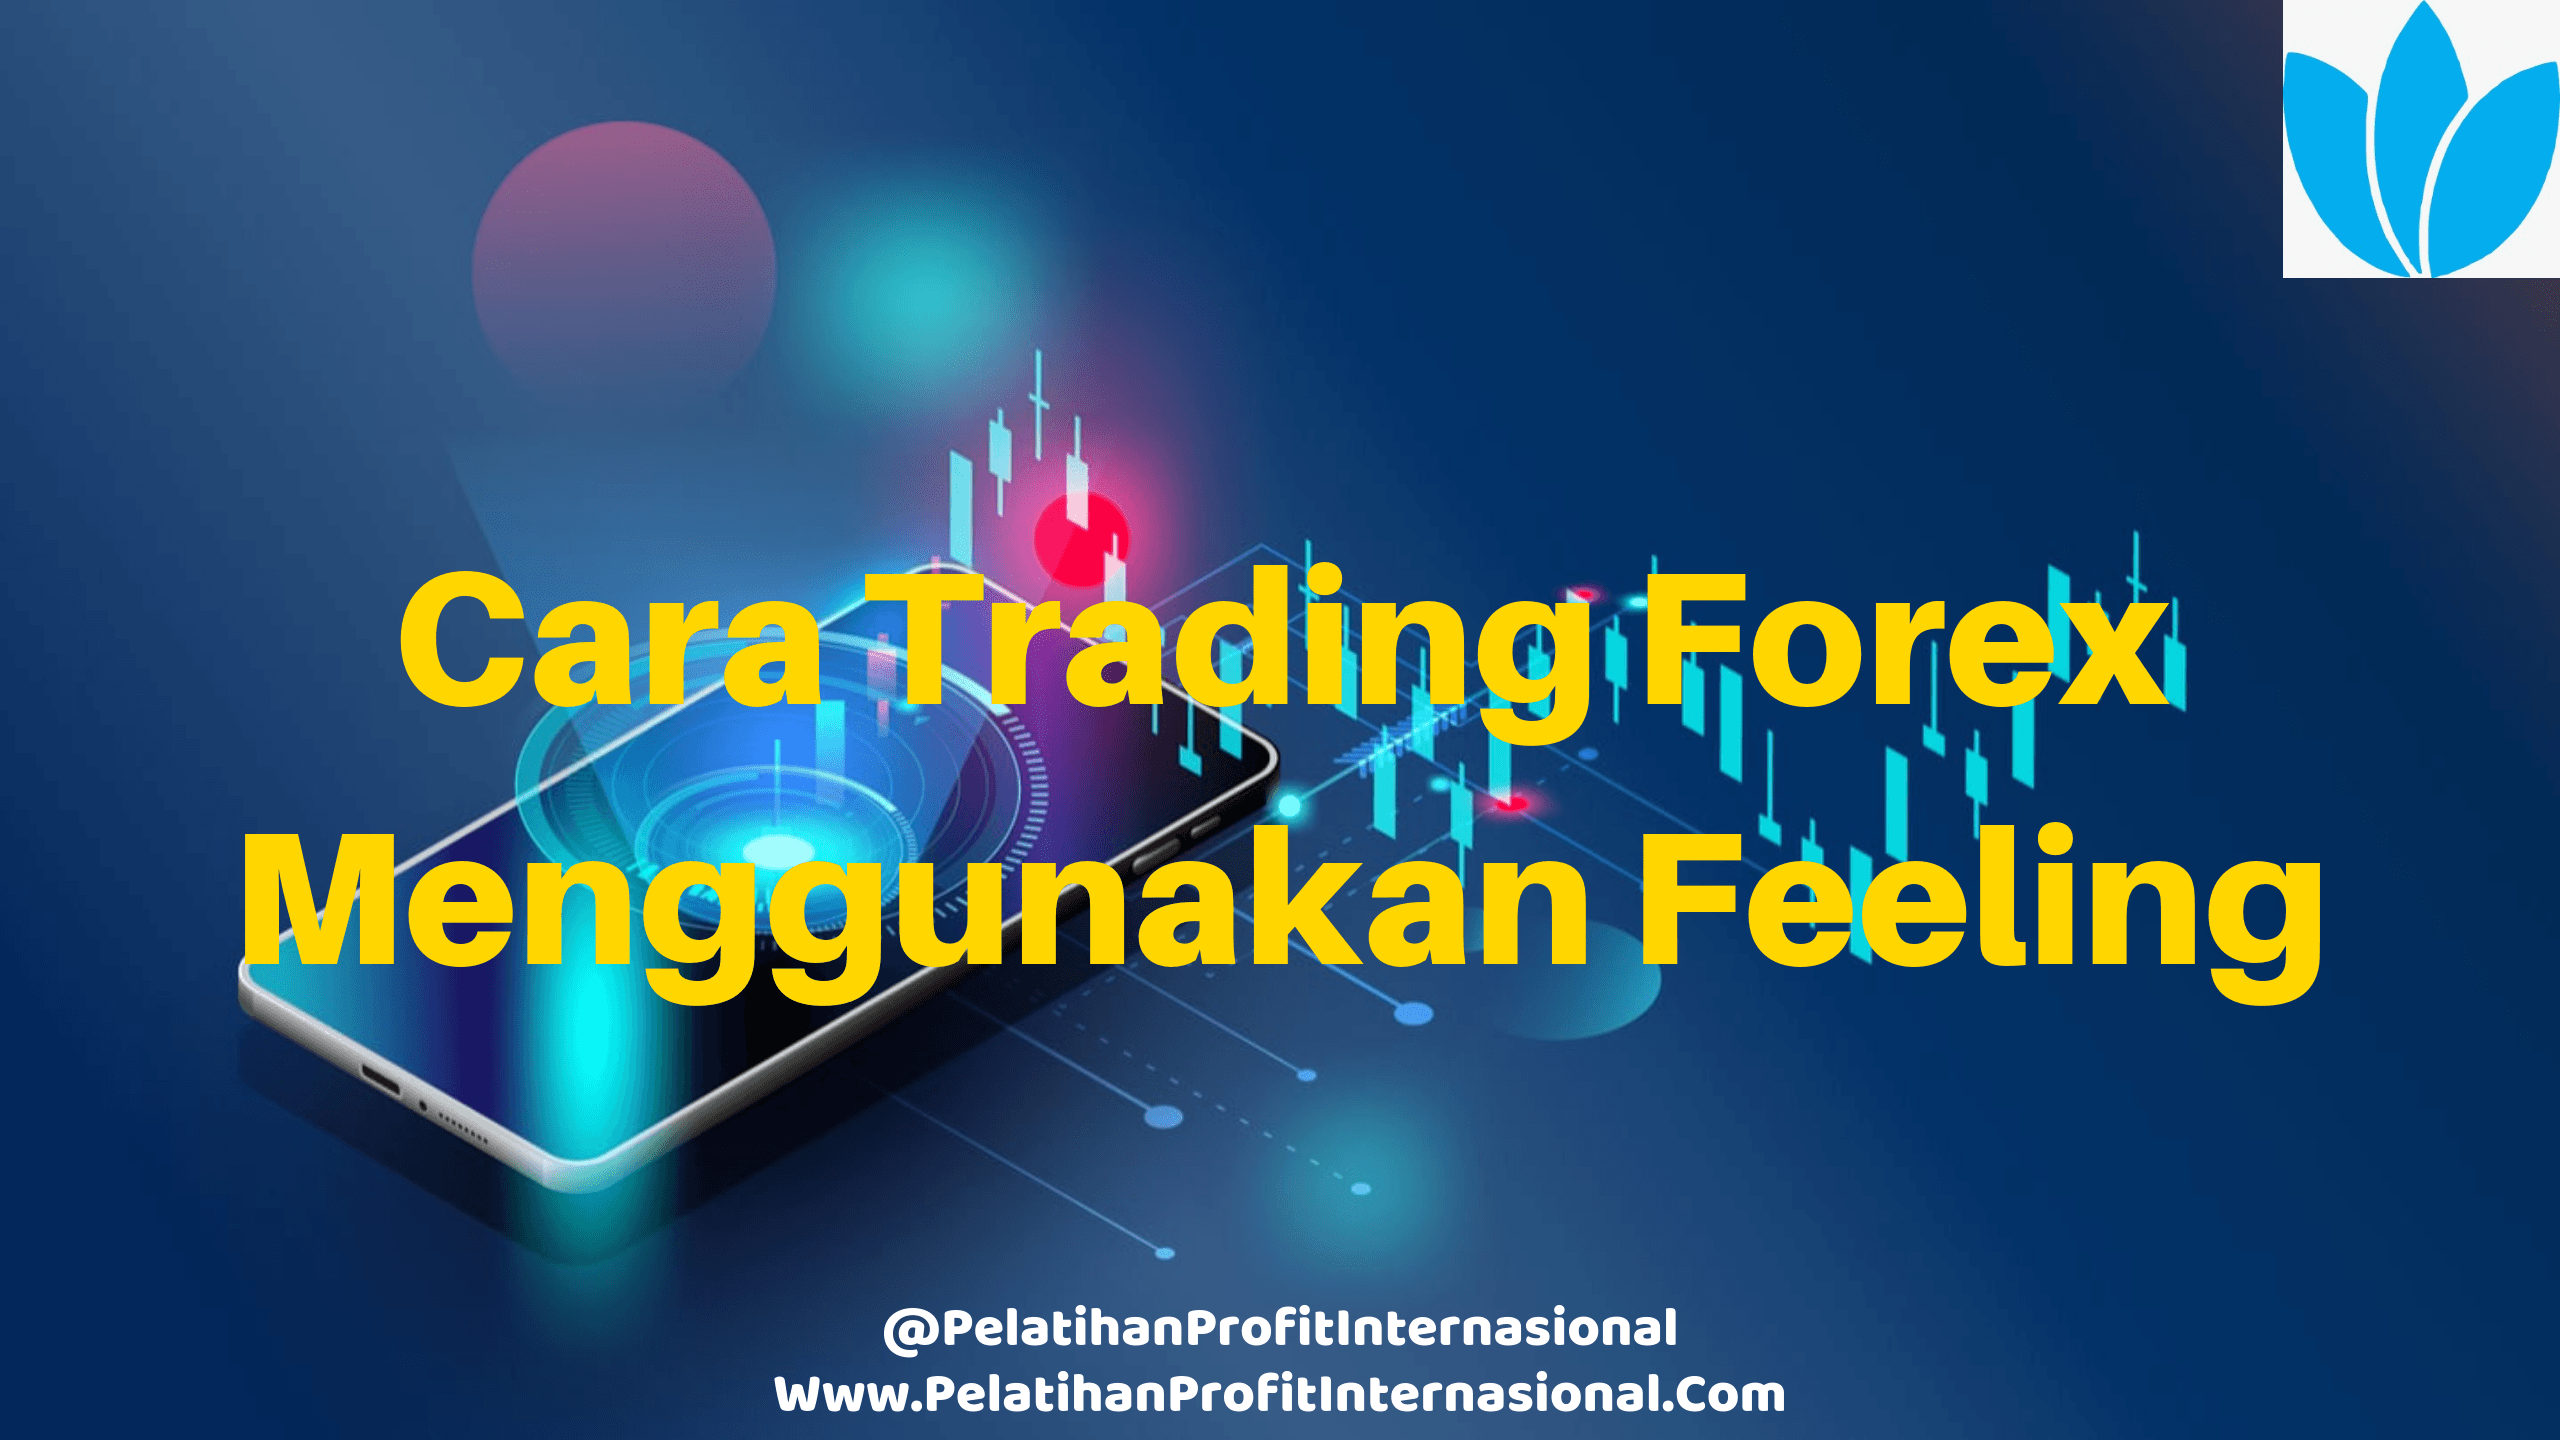 Cara trading forex menggunakan feeling Pelatihan Profit Internasional